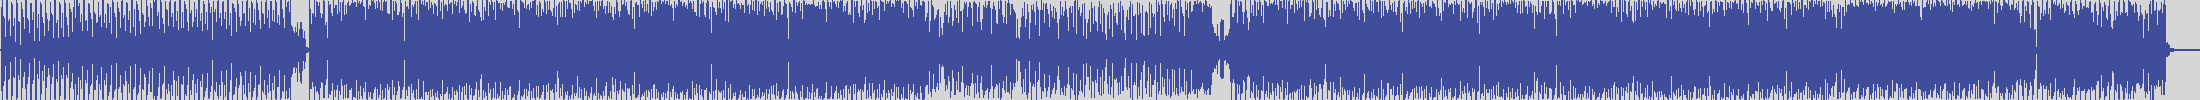 nf_boyz_records [NFY053] Leonhard Markus - Another Mod [Original Mix] audio wave form